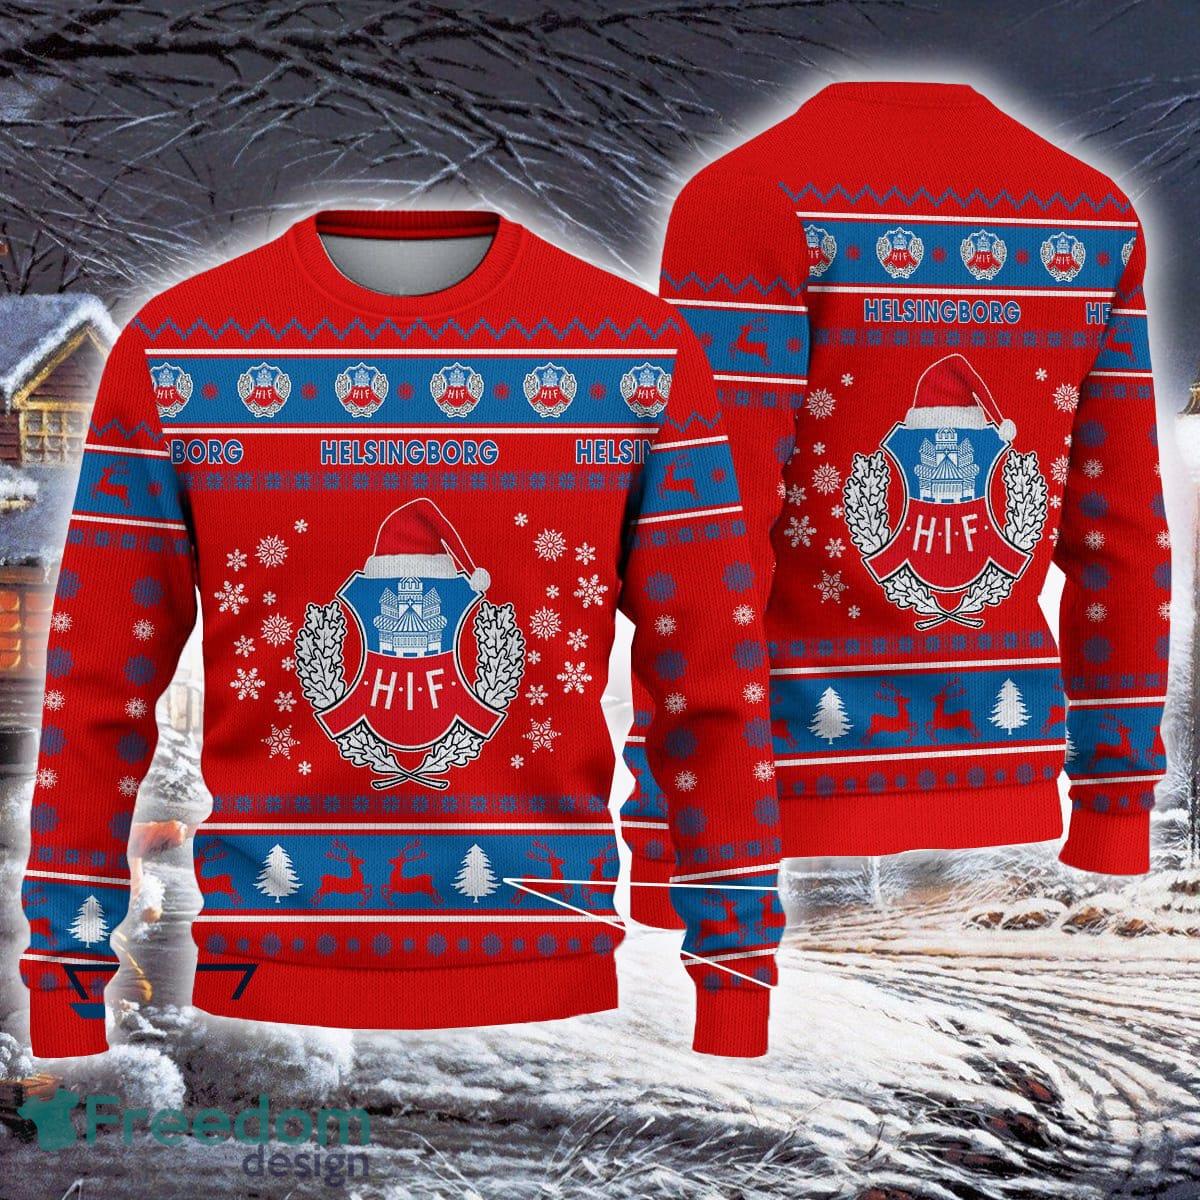 Edmonton Oilers Tree Ugly Christmas Sweater Unisex Christmas Gift For Fans  - Freedomdesign